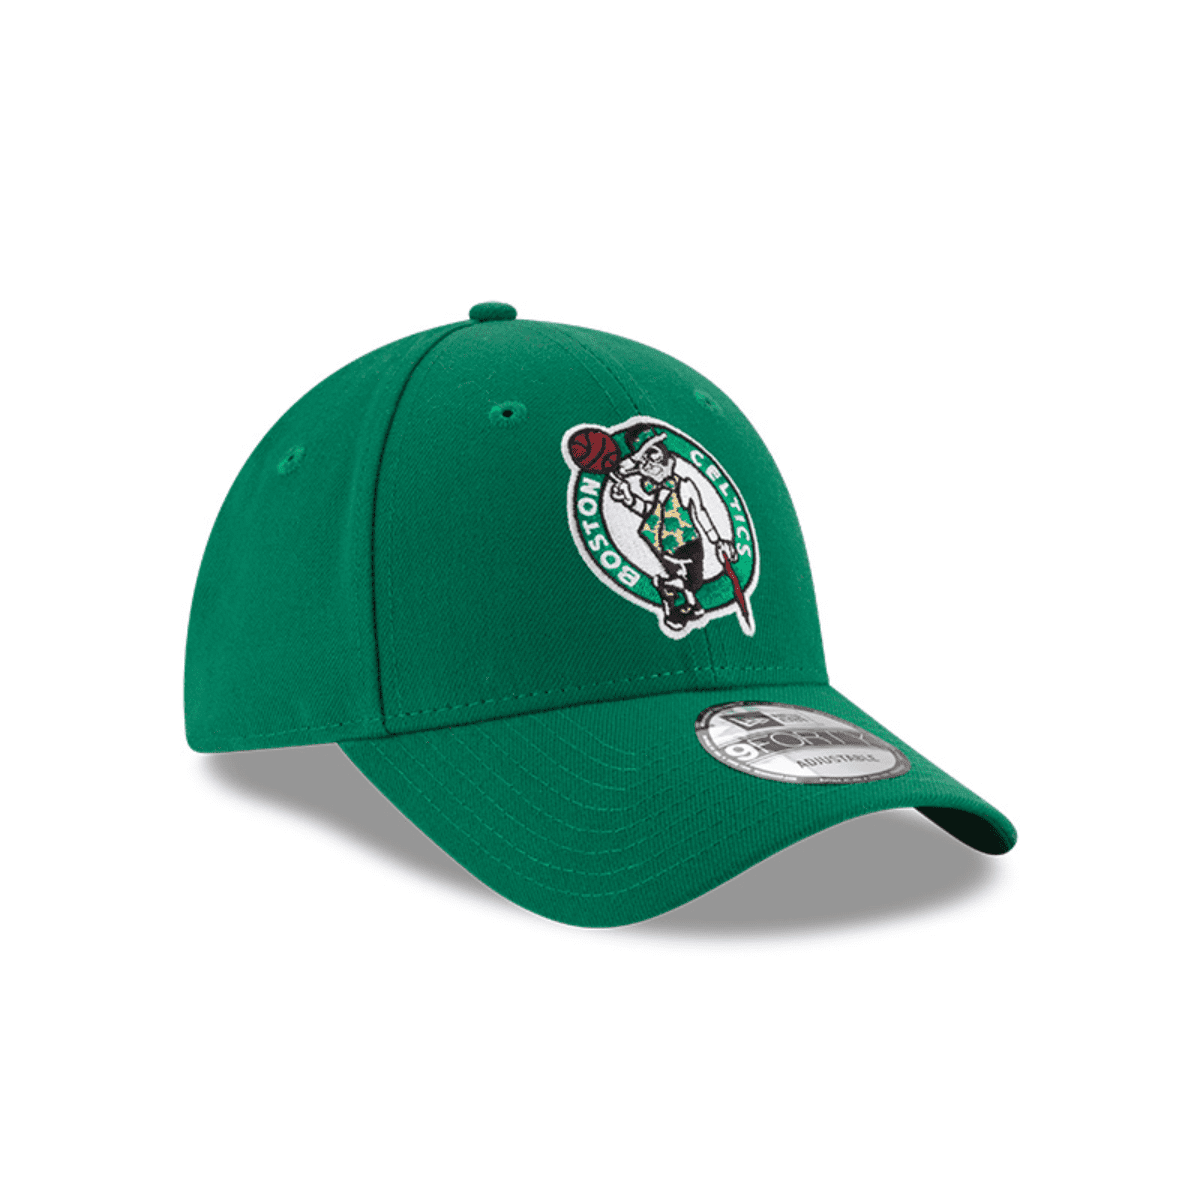 Gorra The League 39Thirty Cerrada / New Era - Boston Celtics